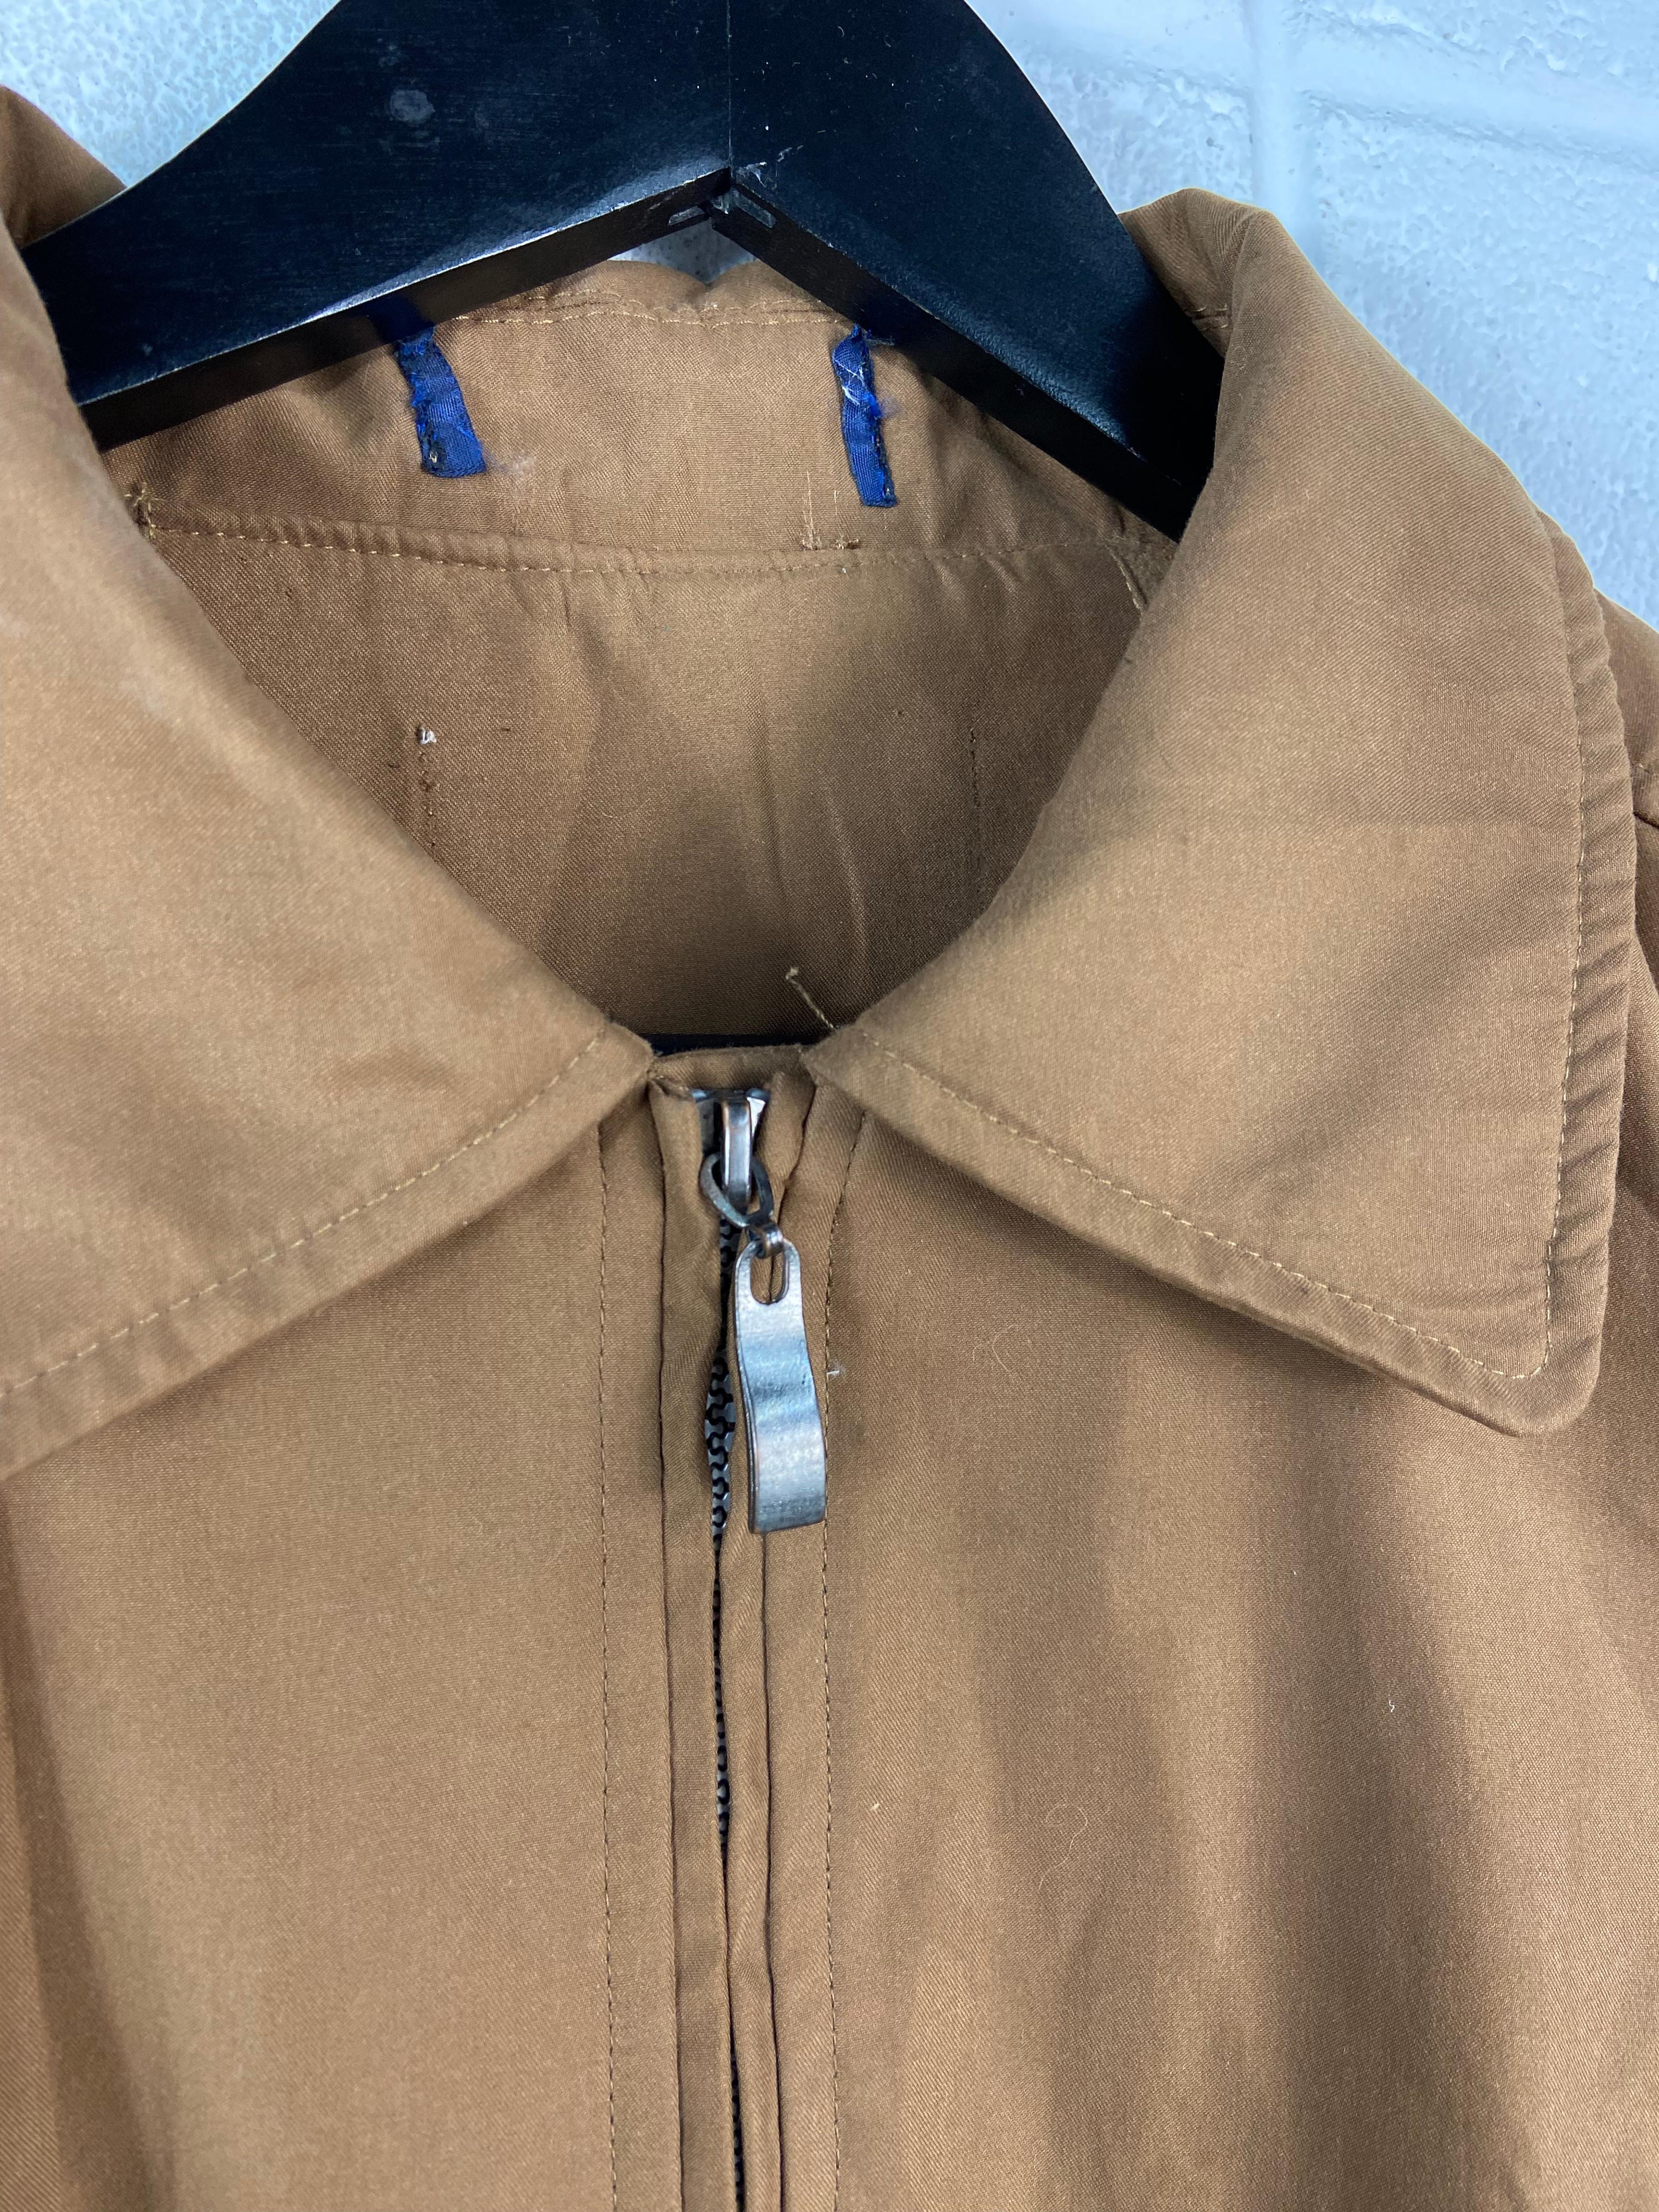 Alternate View 4 of VTG Polo Ralph Lauren Brown Zip Up Jacket Sz XL